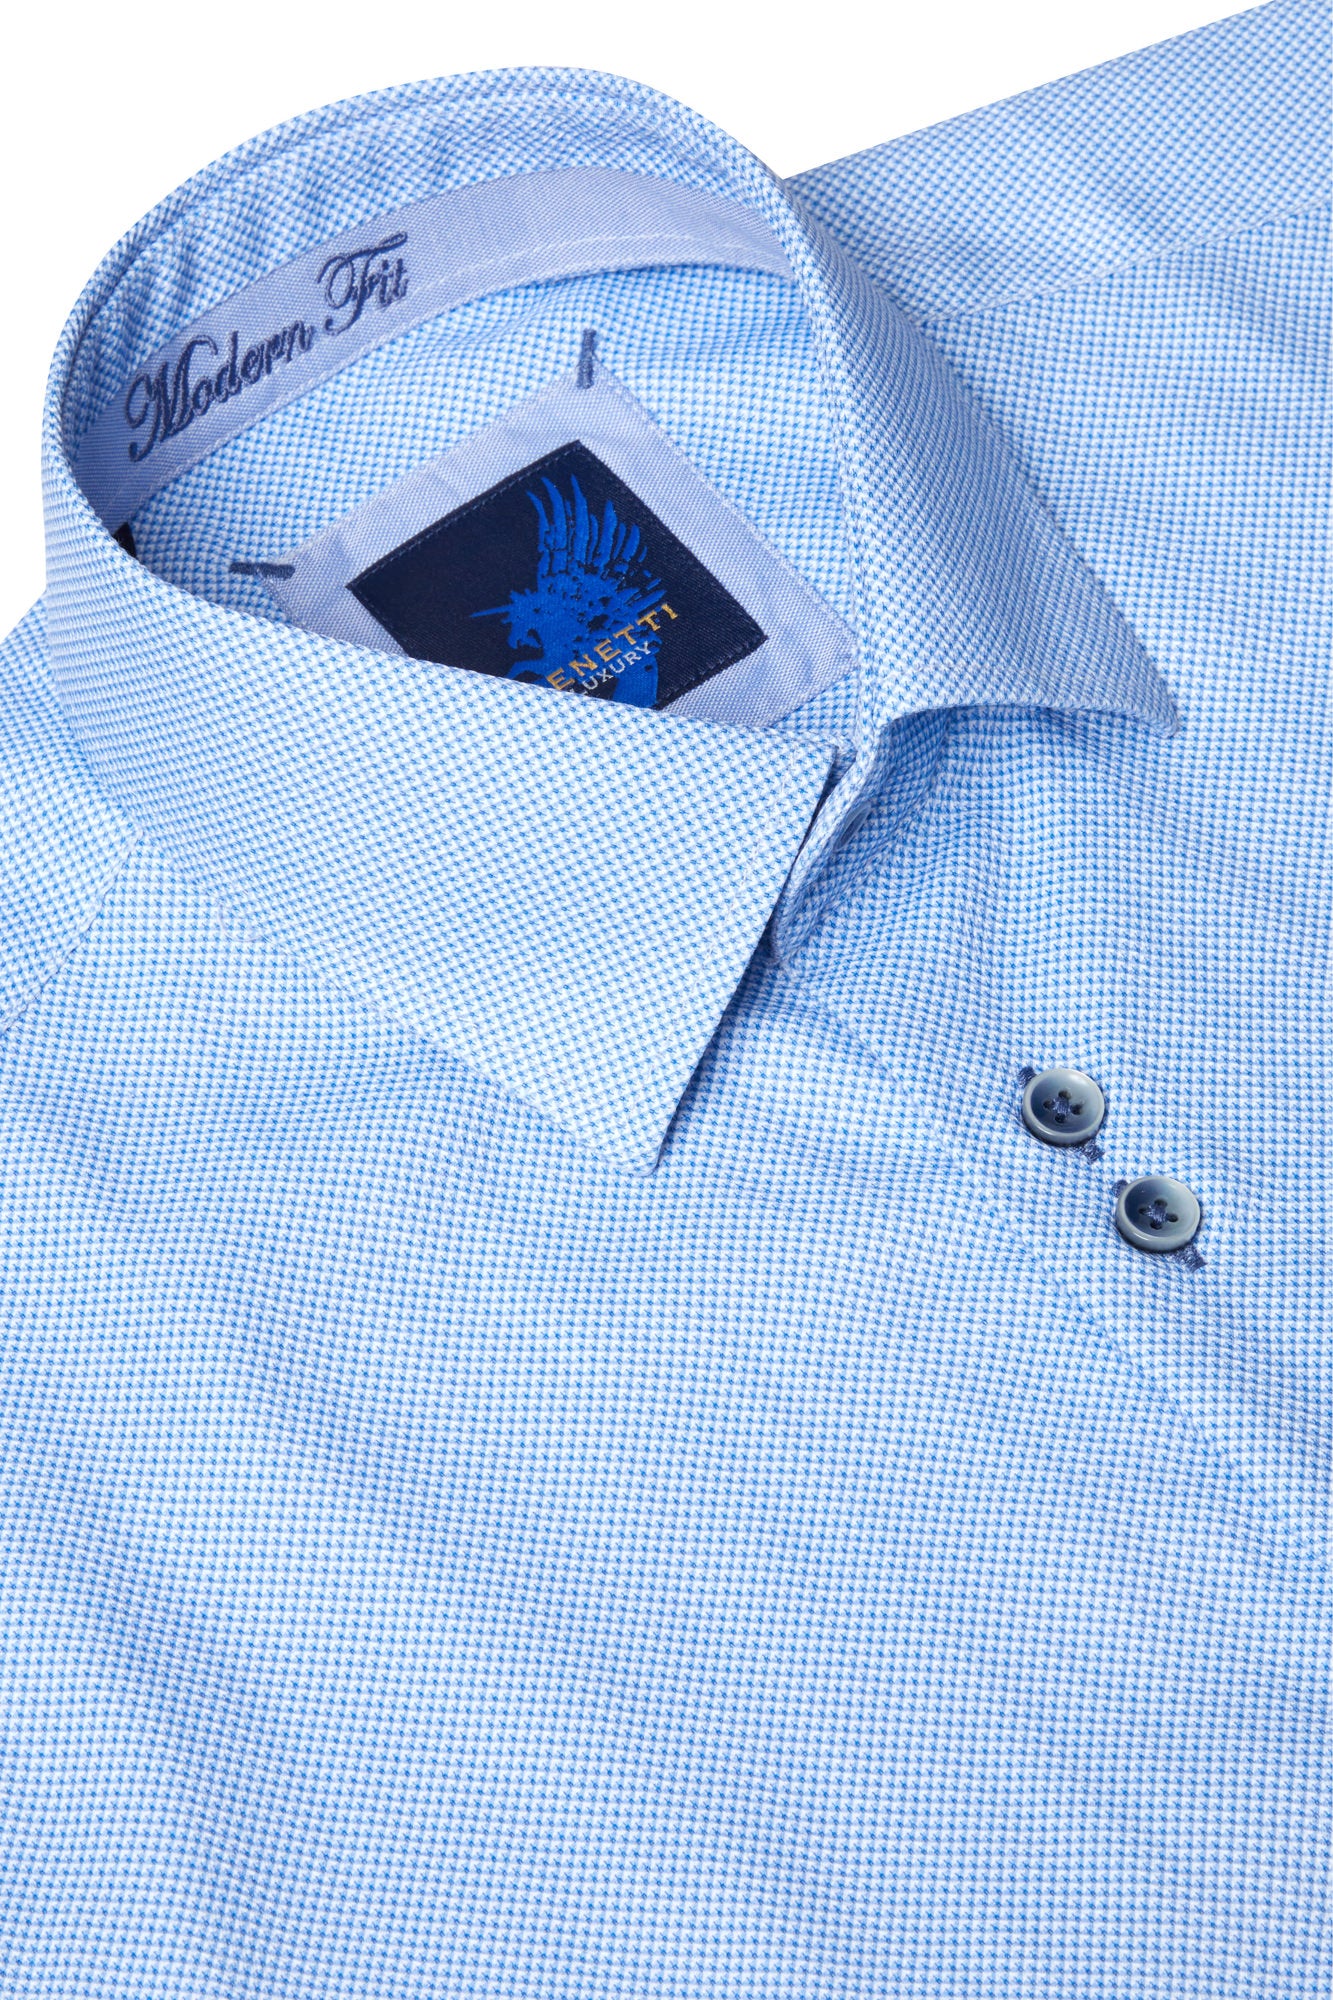 Men's Yang Long Sleeve Blue Shirt-Collar view